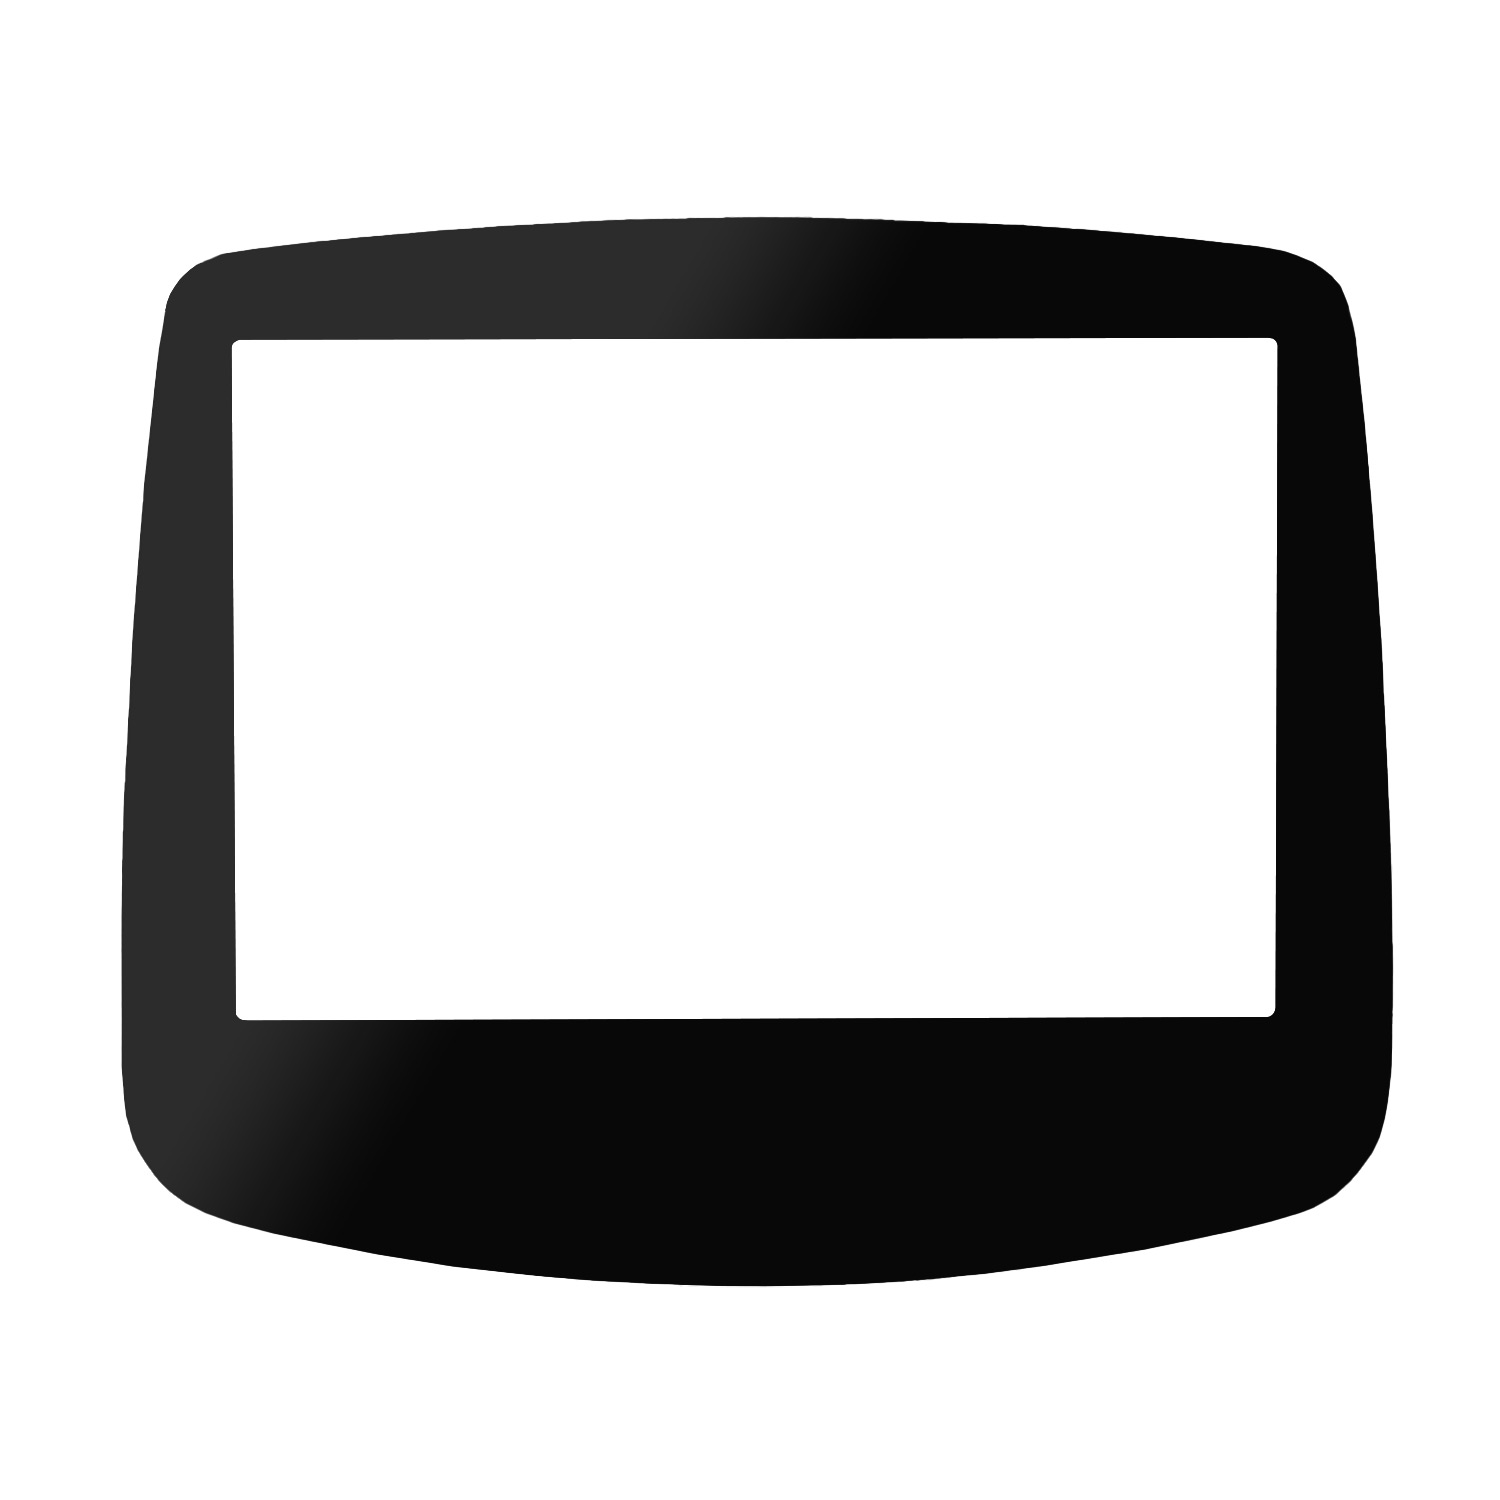 Game Boy Advance glass display pane (Black Debrand)